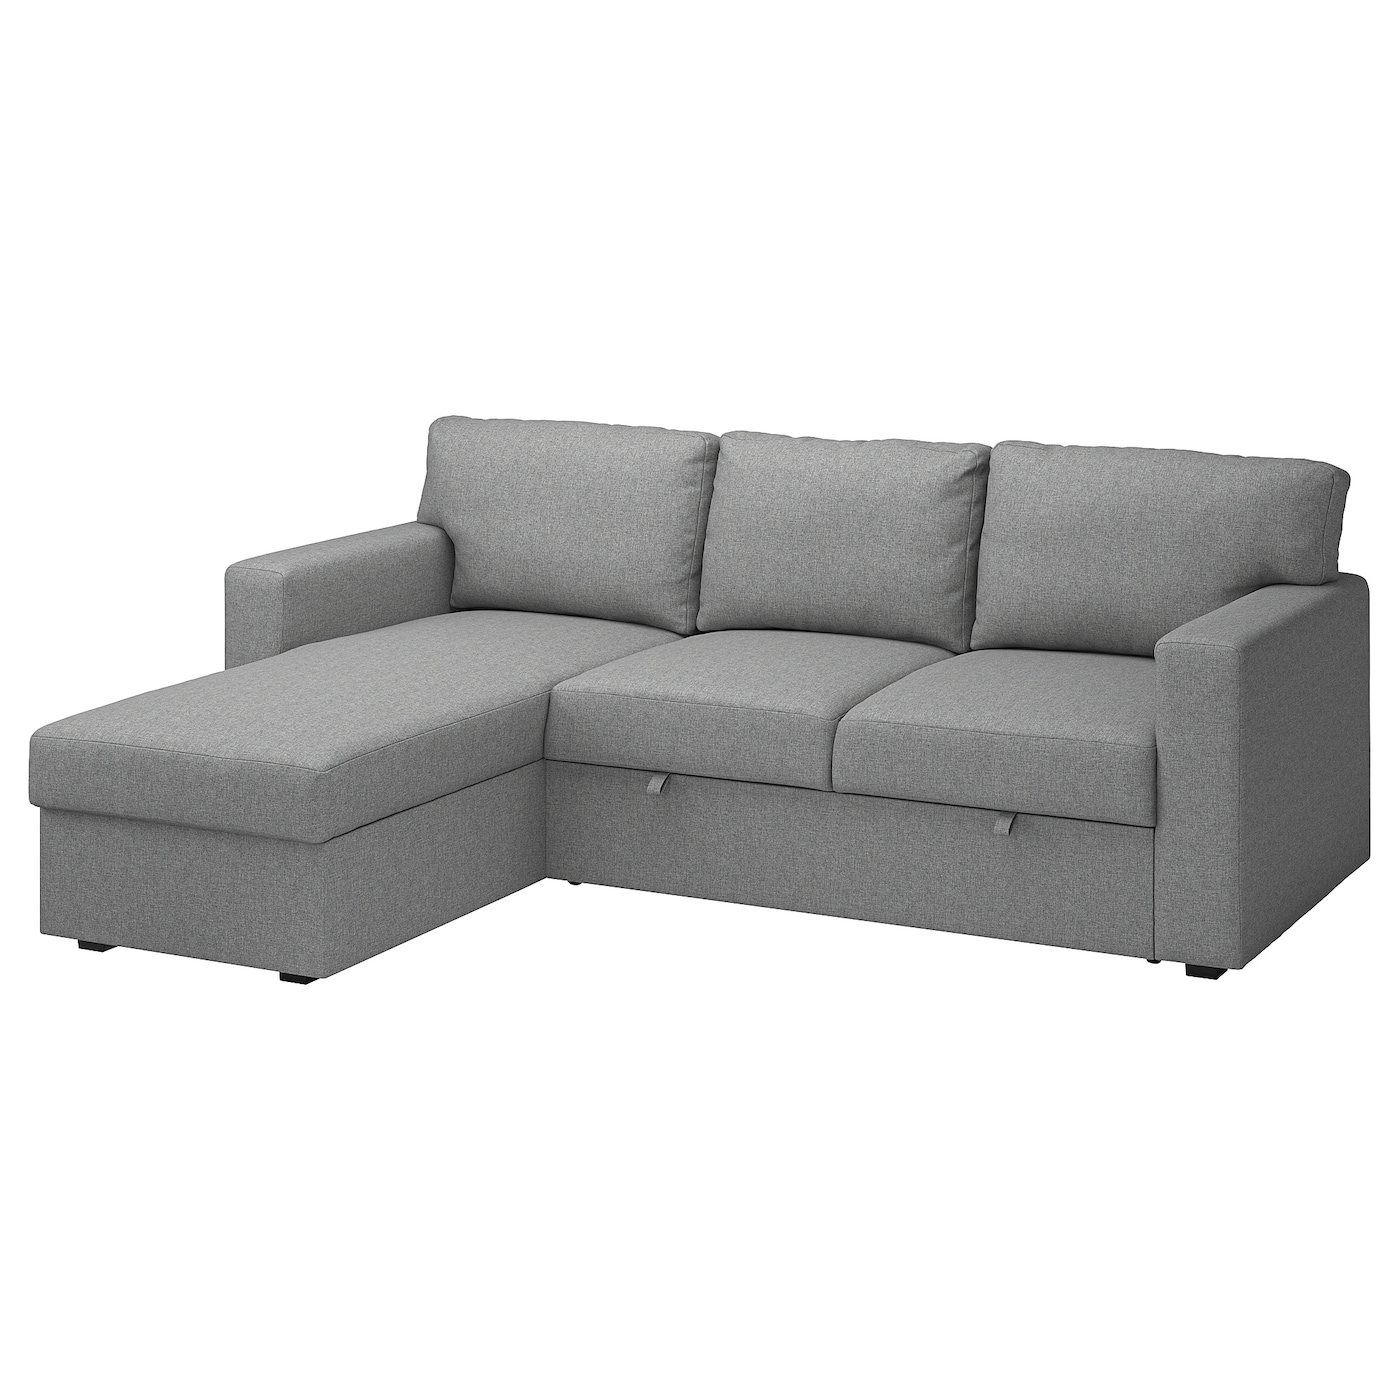 диван кровать малютка 2 кордрой бежевый БОРСЛОВ 3-местный диван-кровать + диван, Тибблби бежевый/серый BÅRSLÖV IKEA